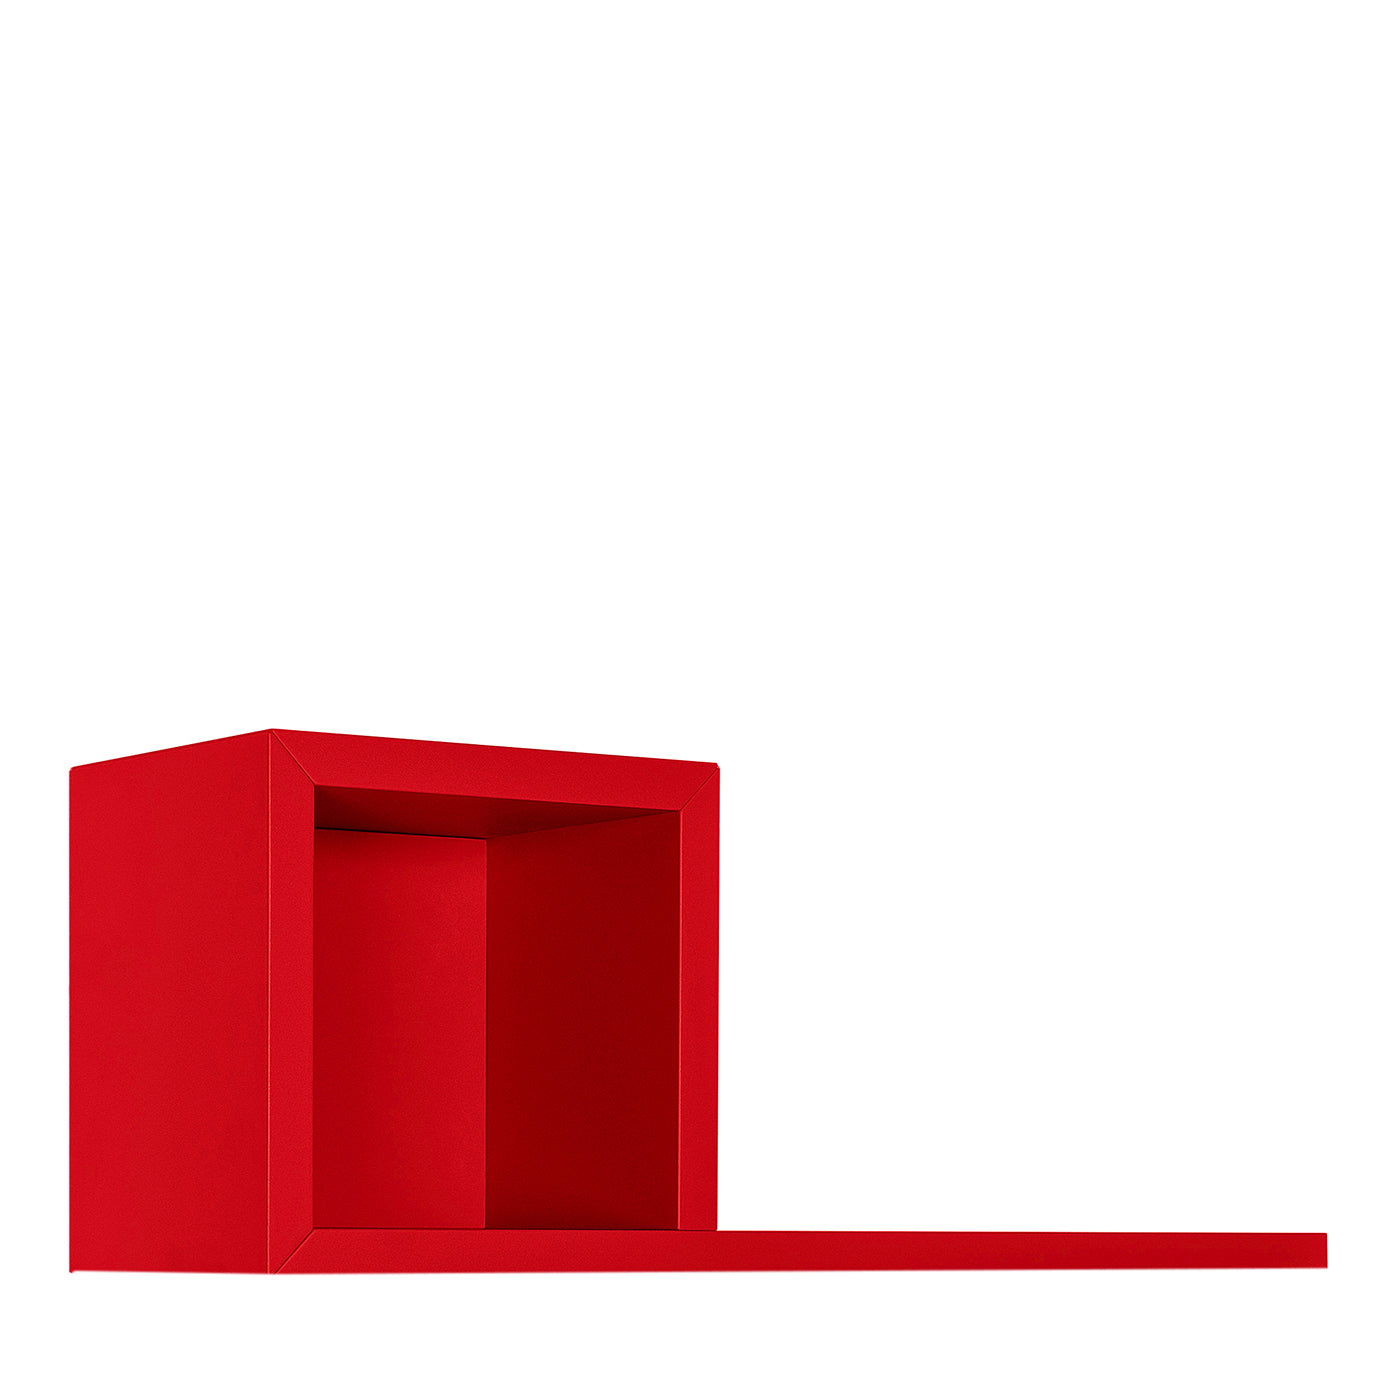 AL.96 Red Shelf by Alan Cornolti - Main view